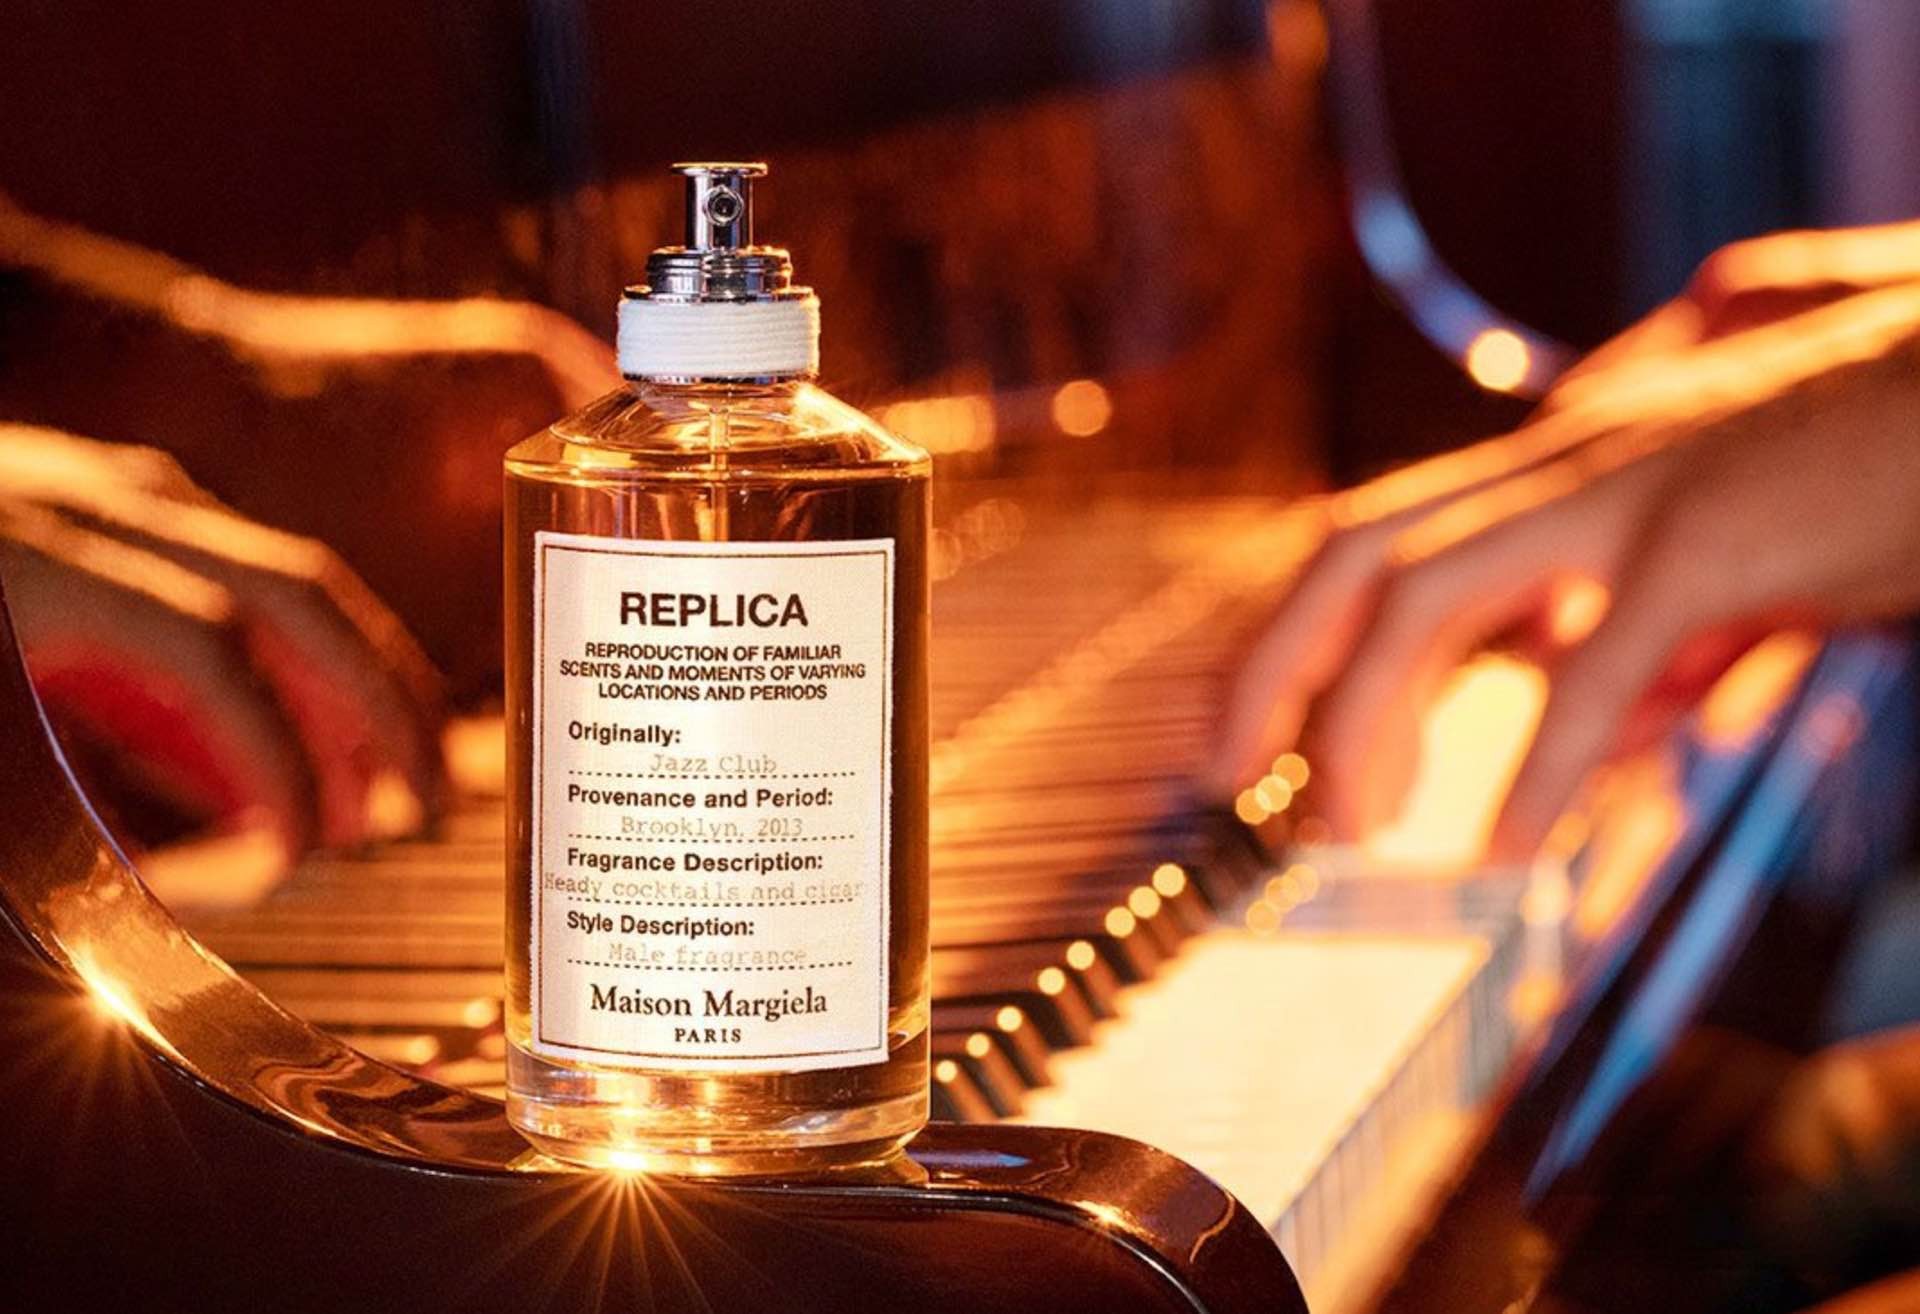 Maison Margiela “REPLICA Jazz Club” fragrance. ($123 for 3.4 fl oz bottle or $38 for 0.34oz travel spray)